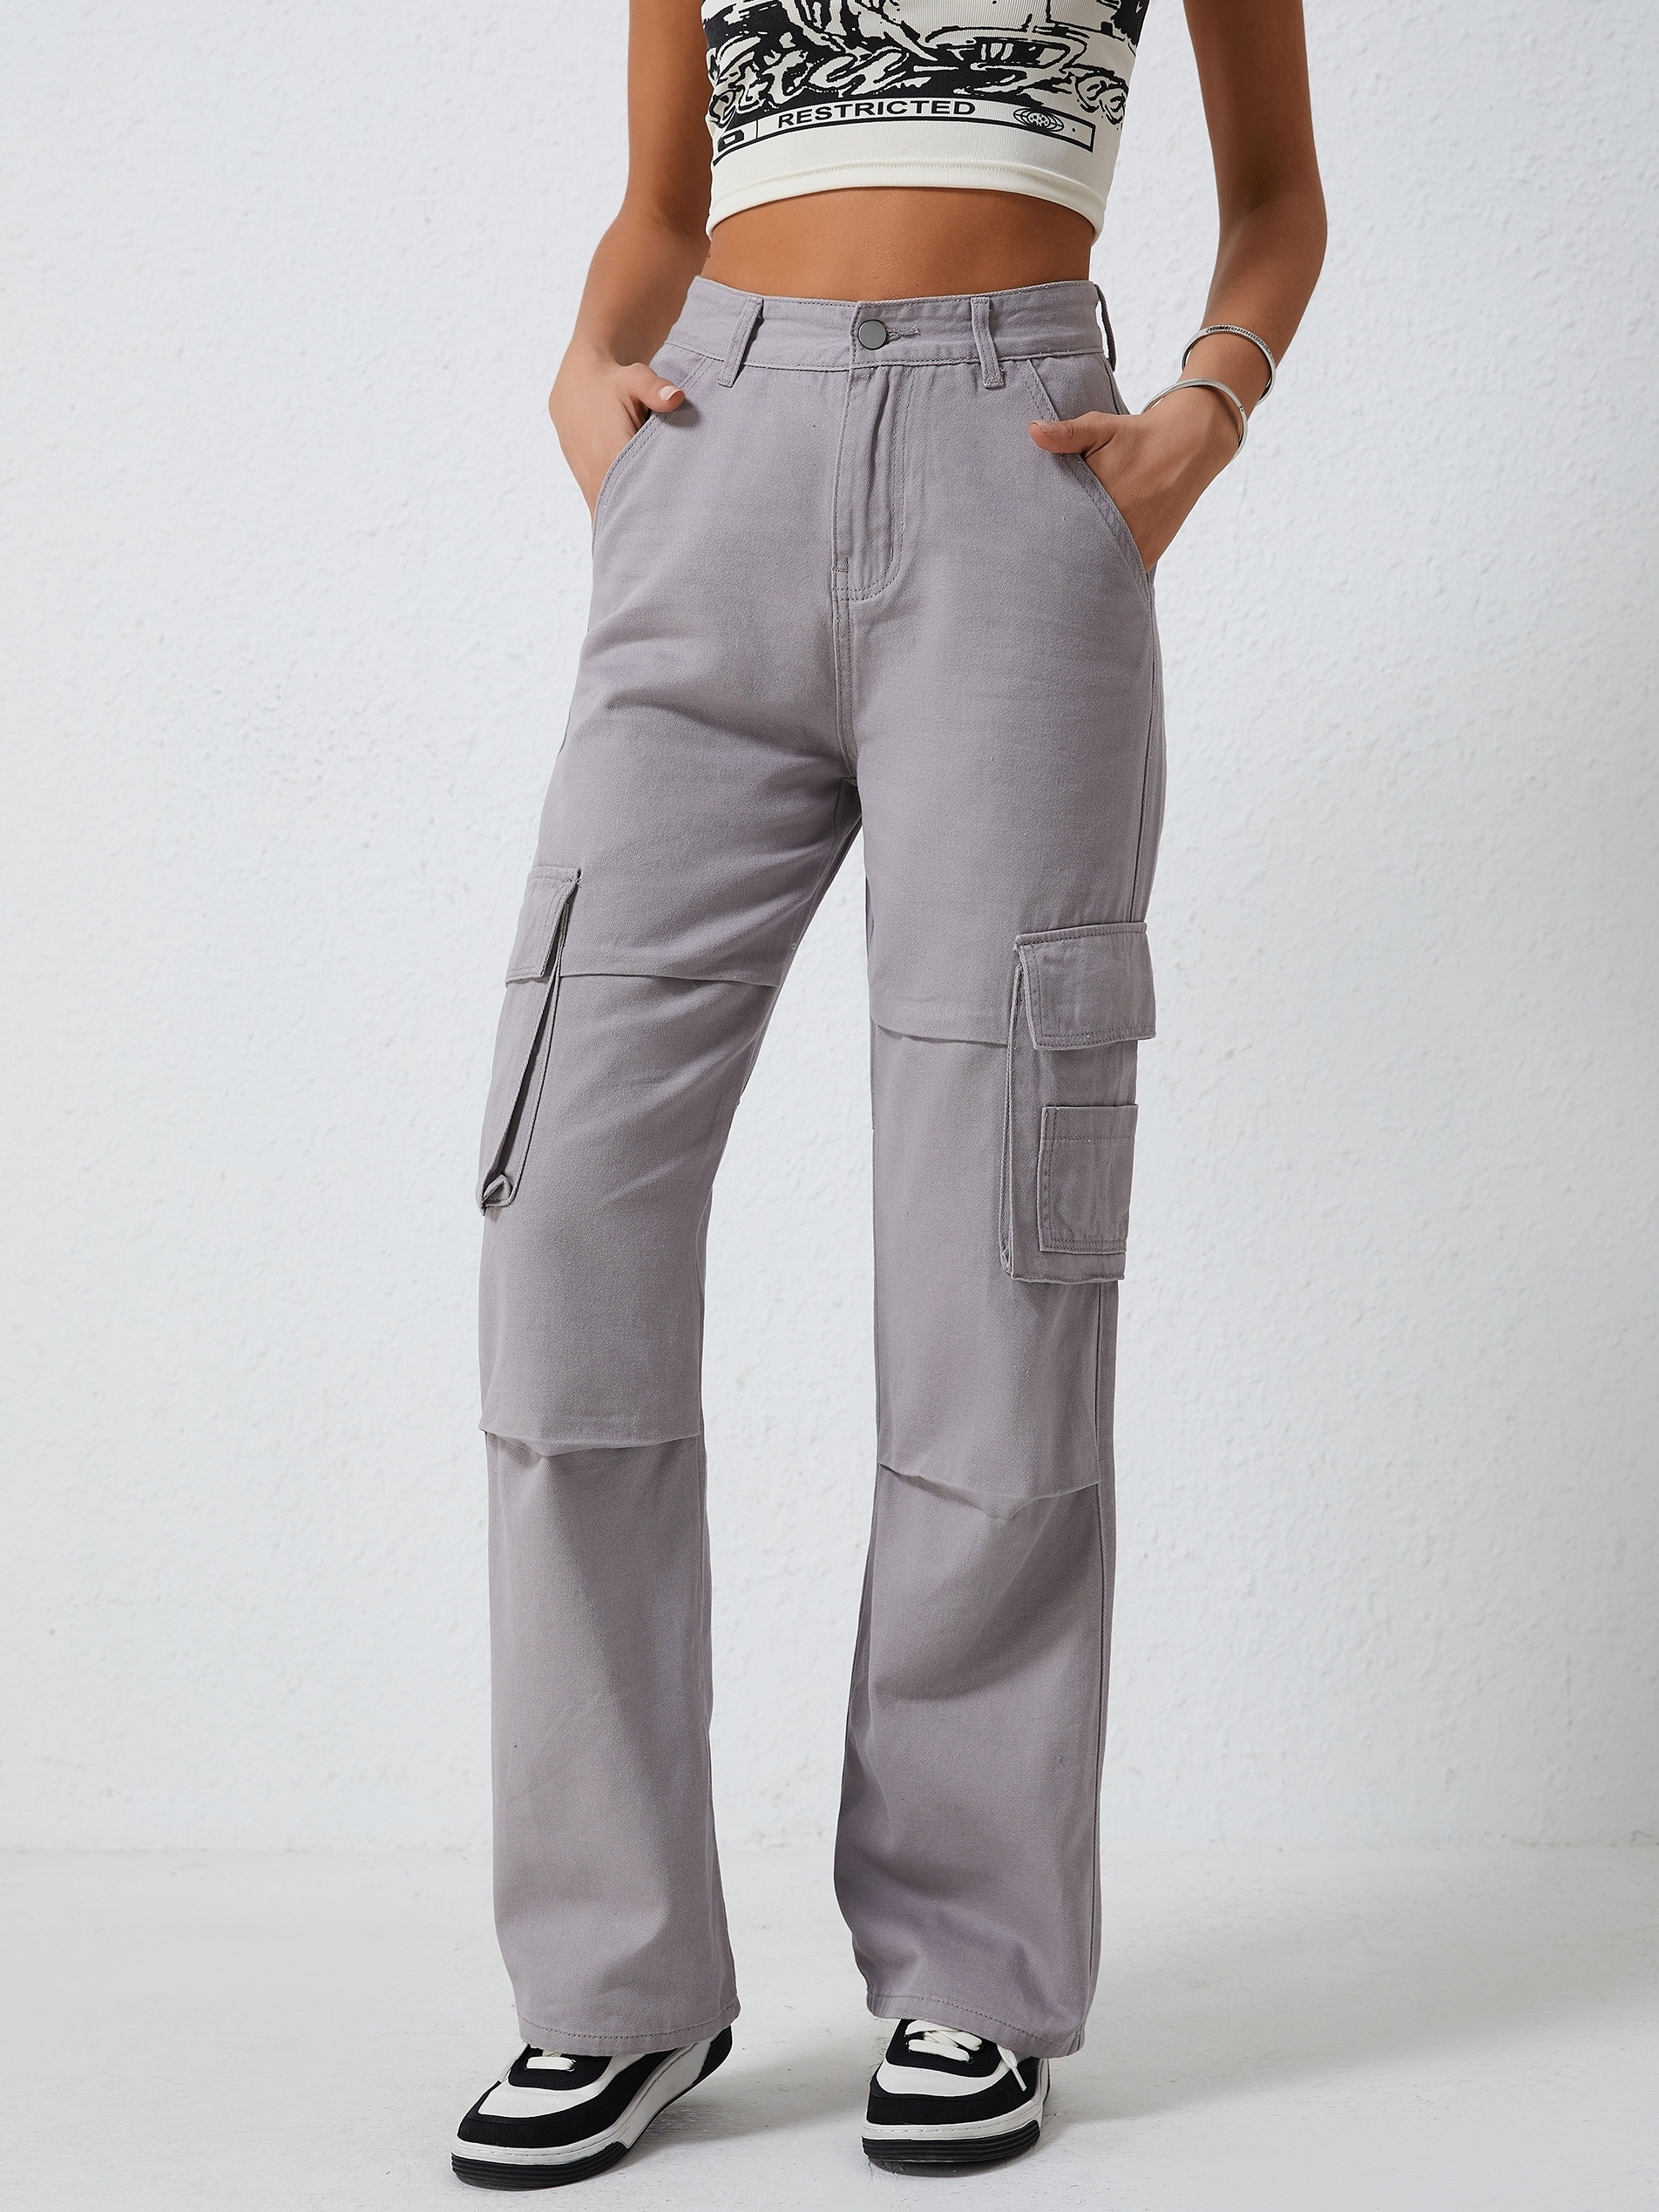 Loose Pants Women Streetwear Fashion Mid-waist Elastic Cargo Pants